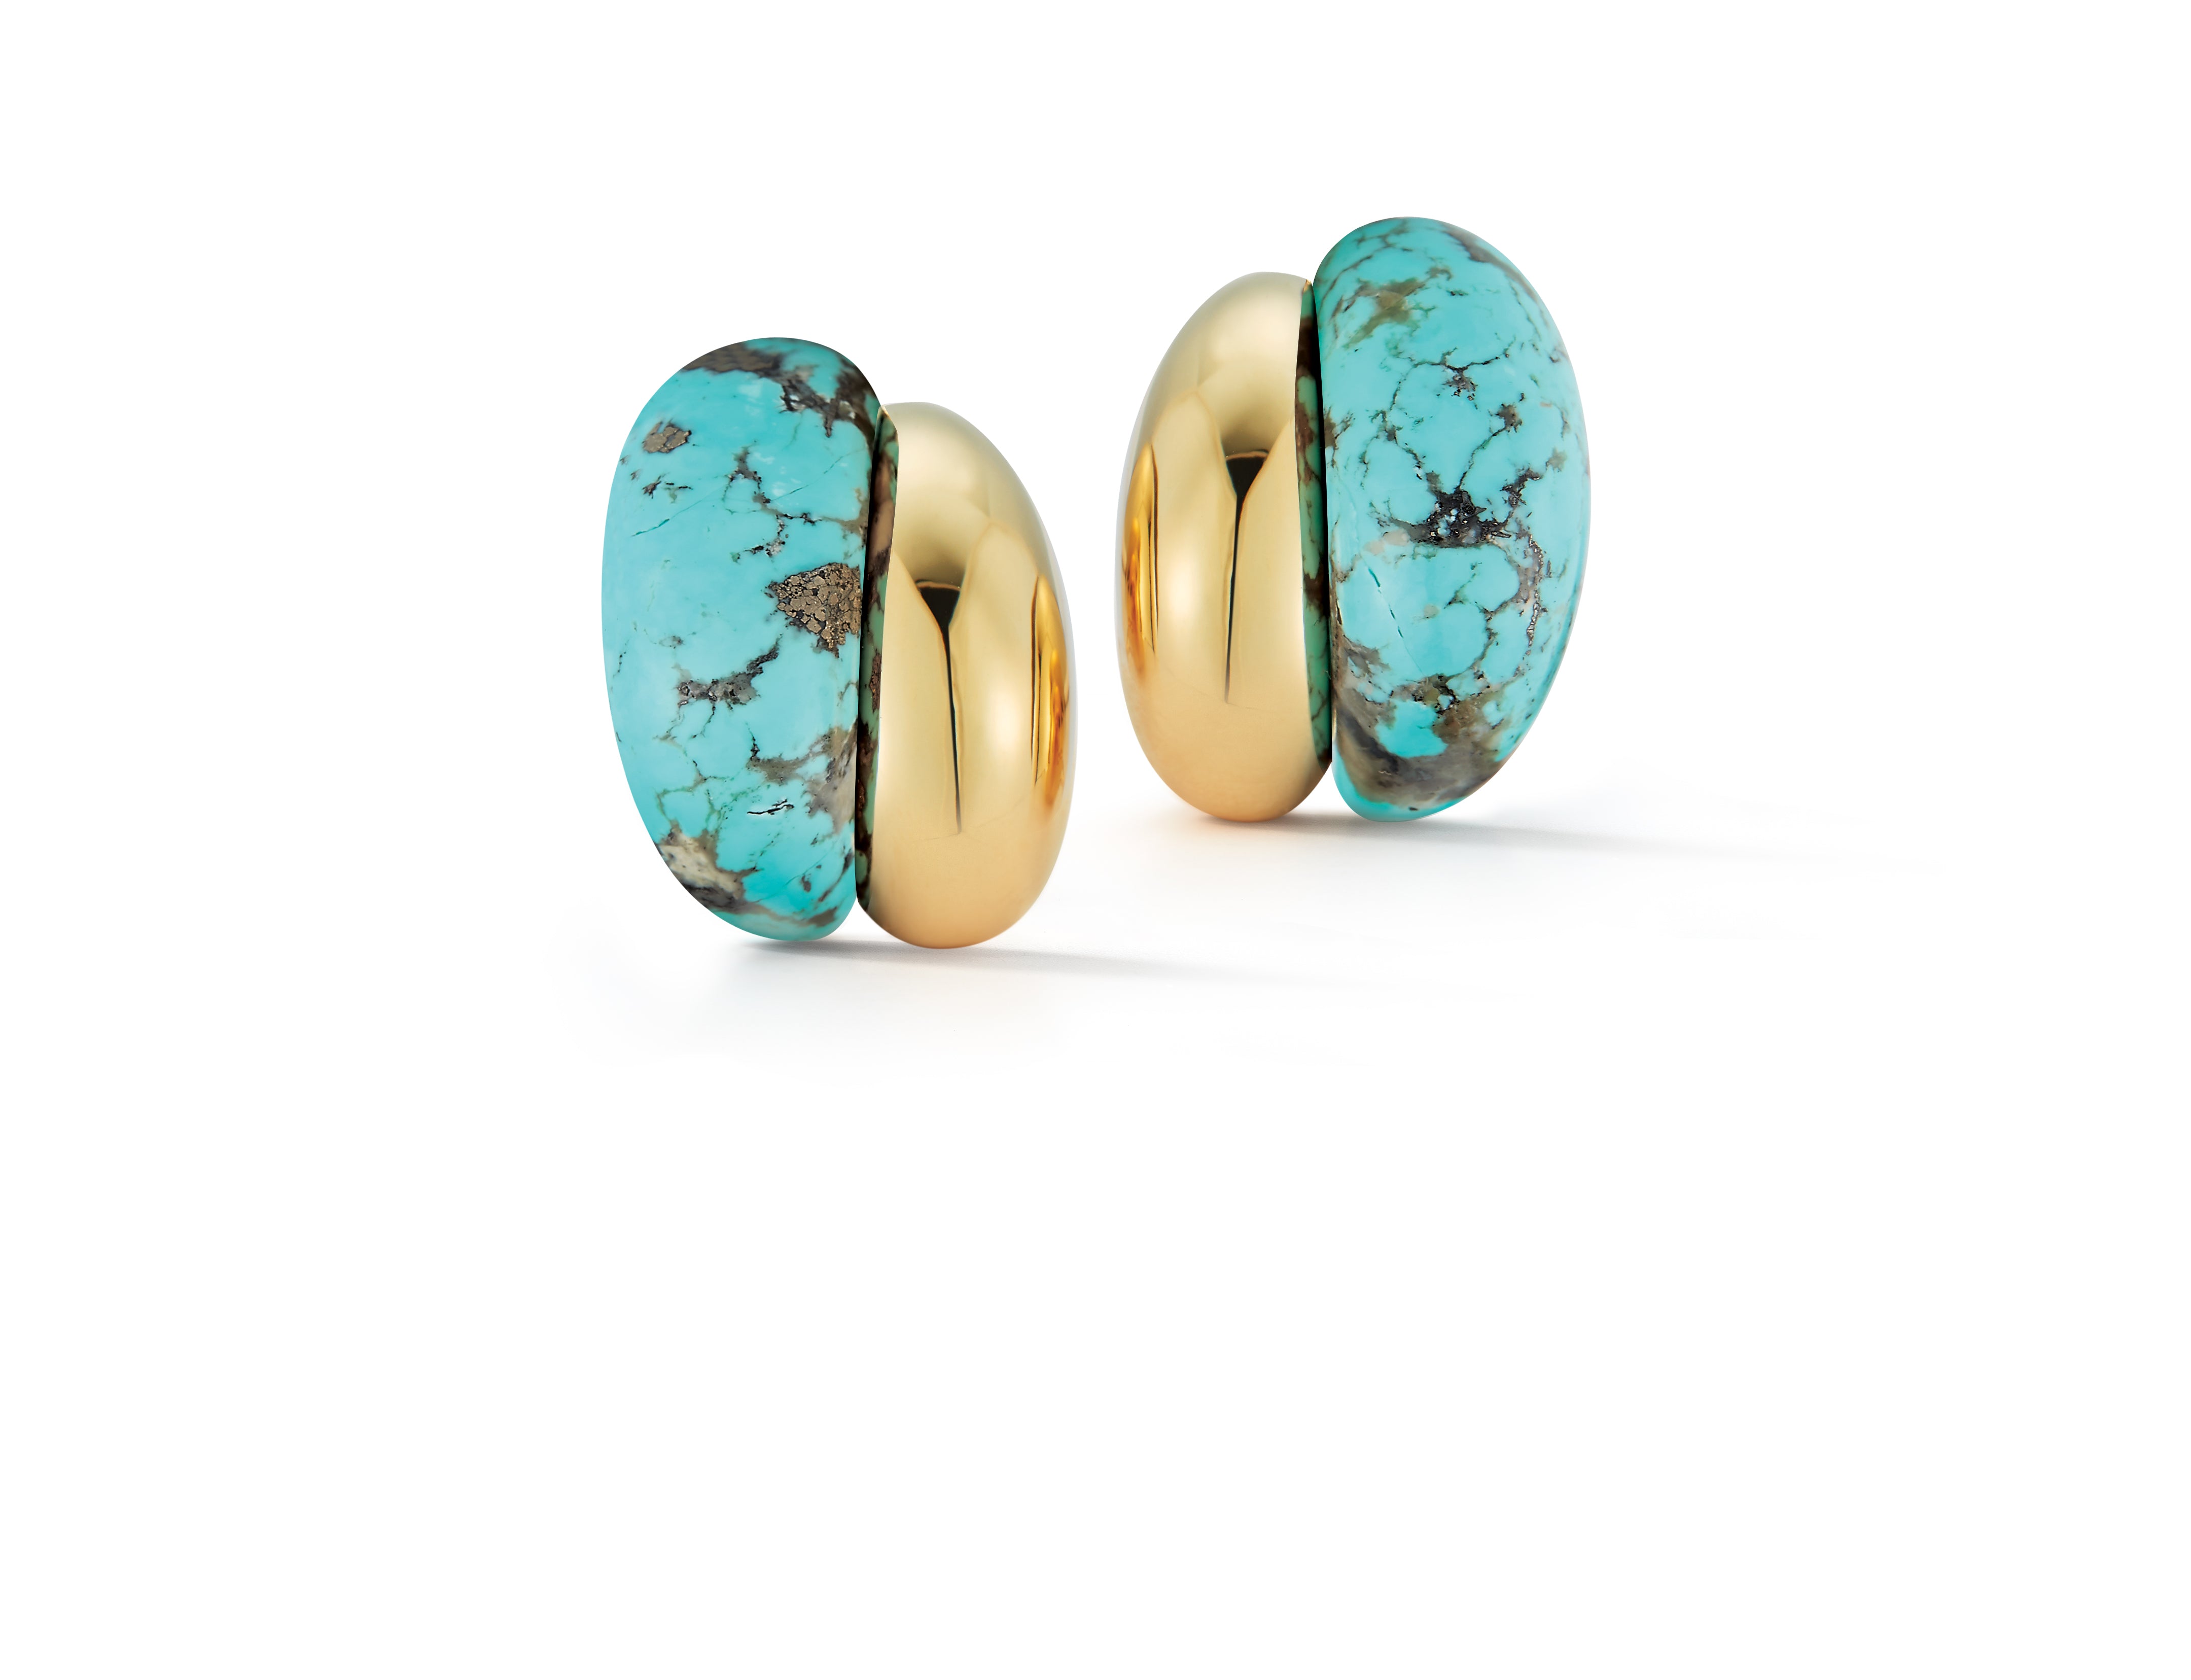 Silhouette Earrings in Turquoise